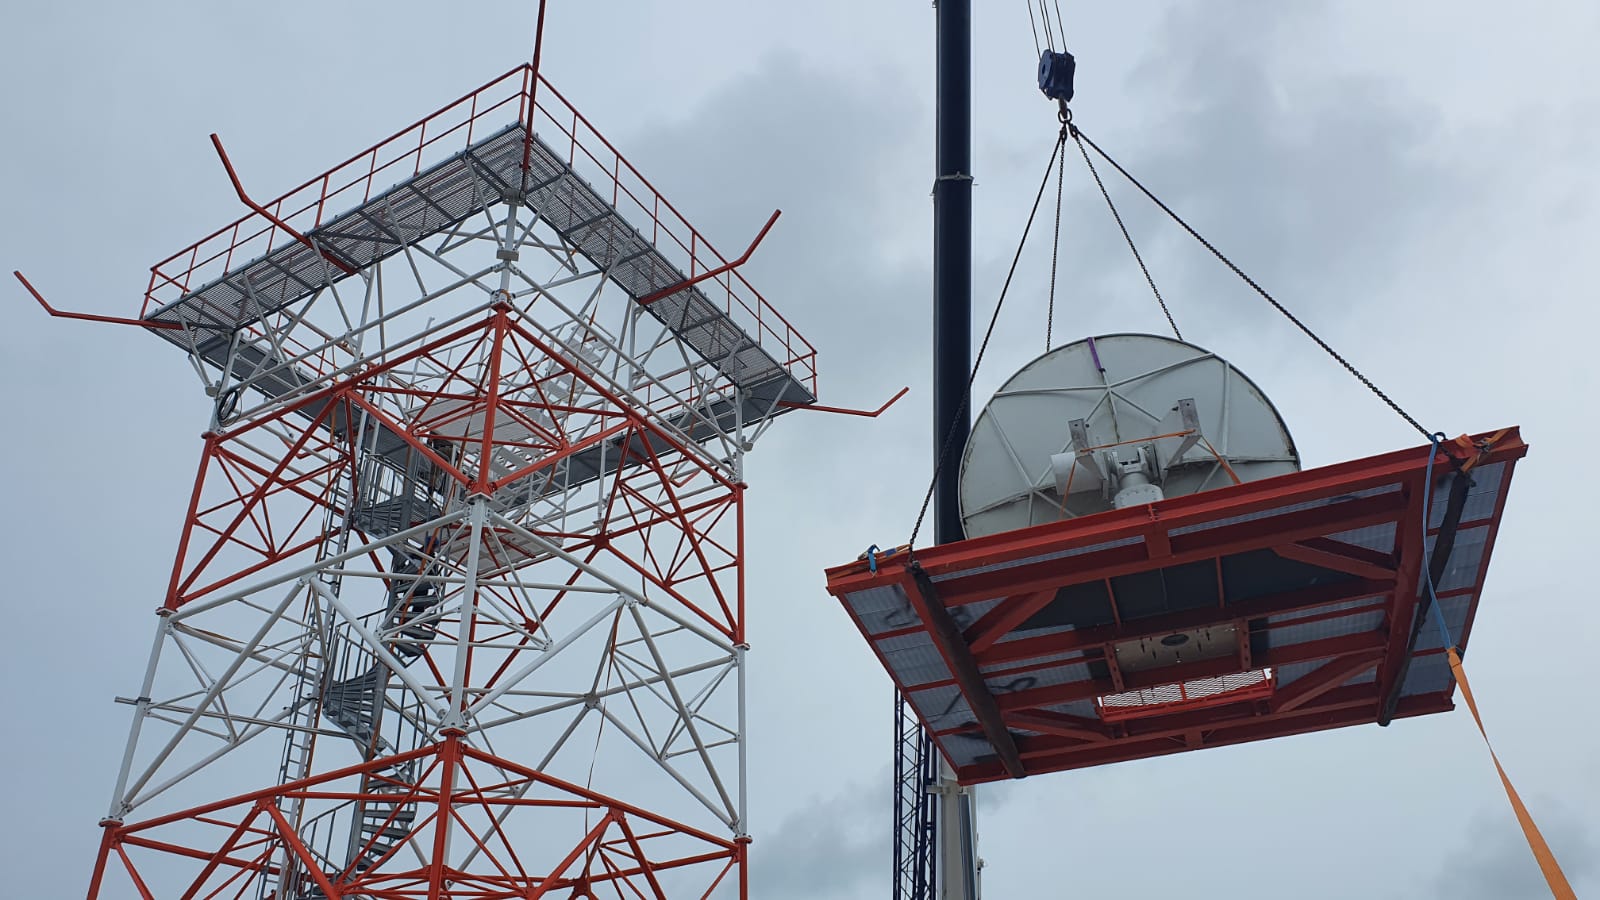 ragged island weather radar station construction